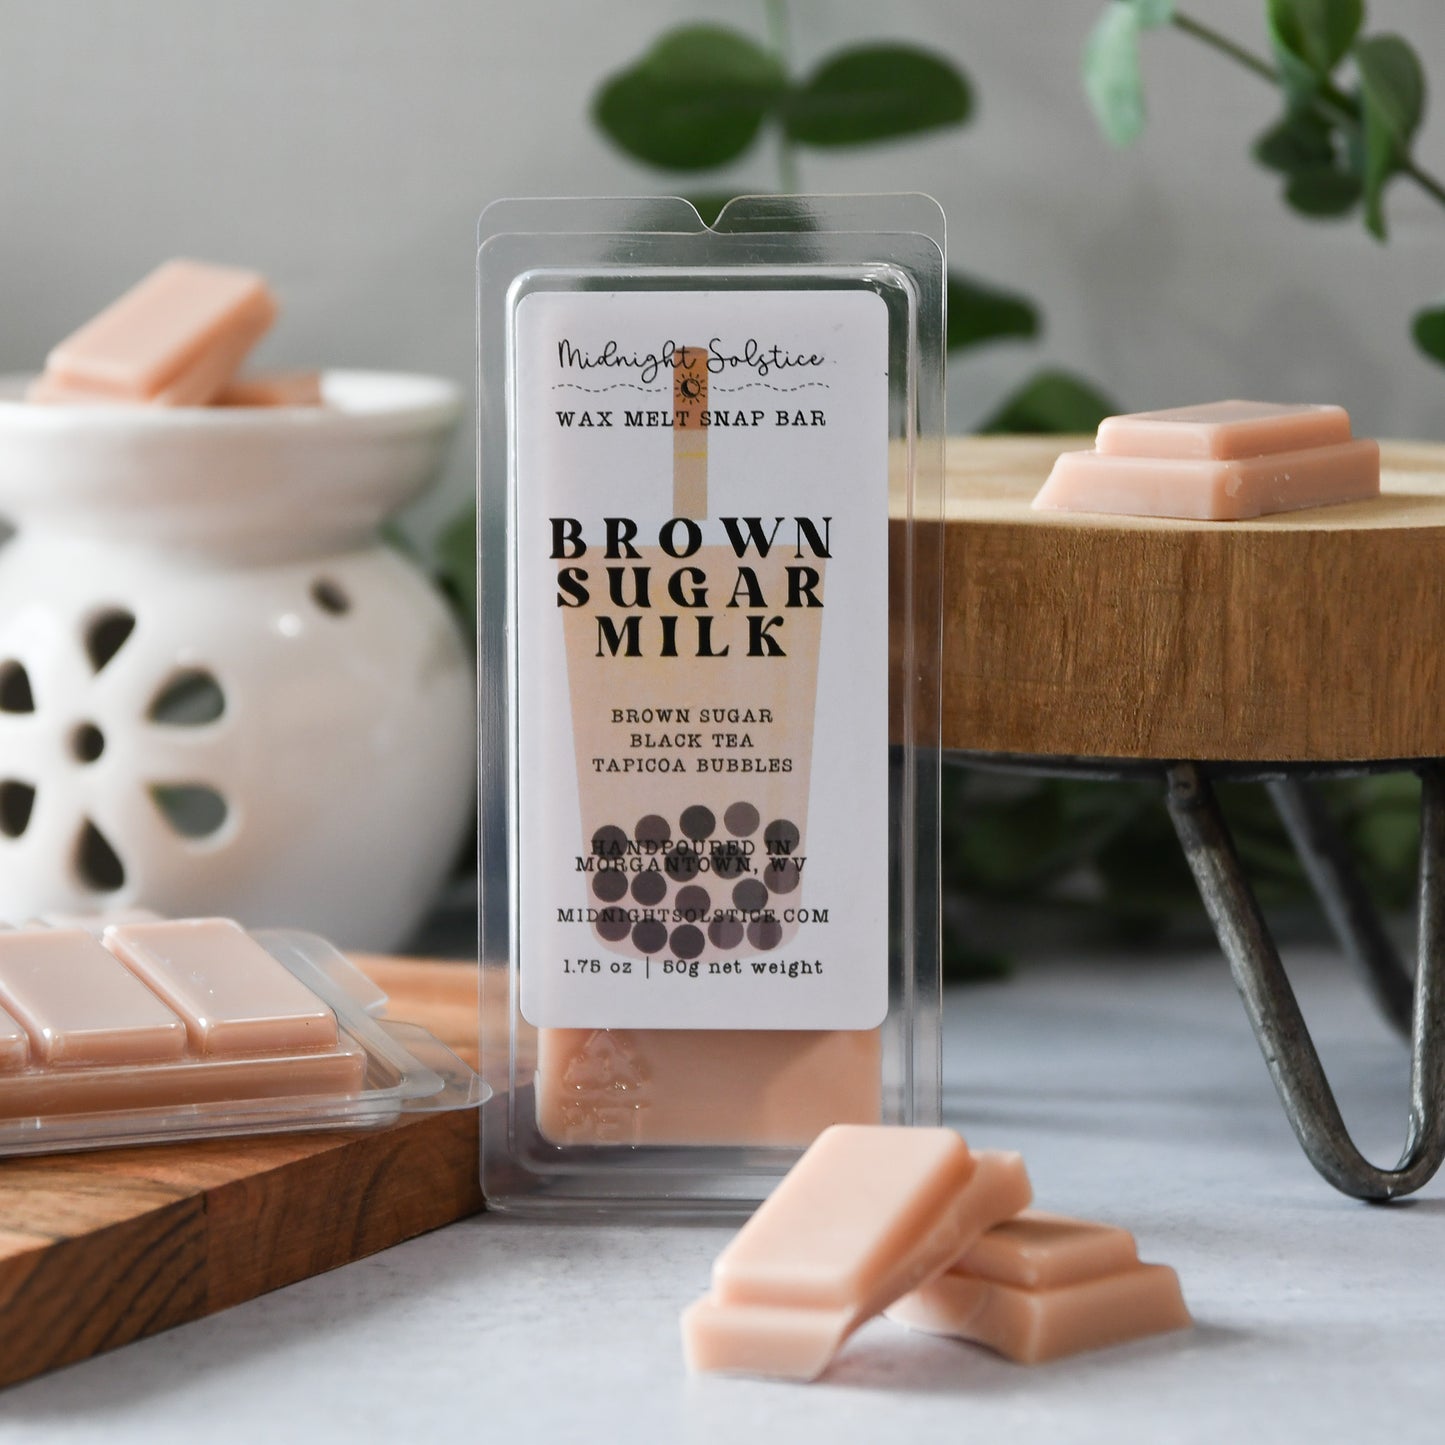 Brown Sugar Milk - Wax Melt Snap Bar